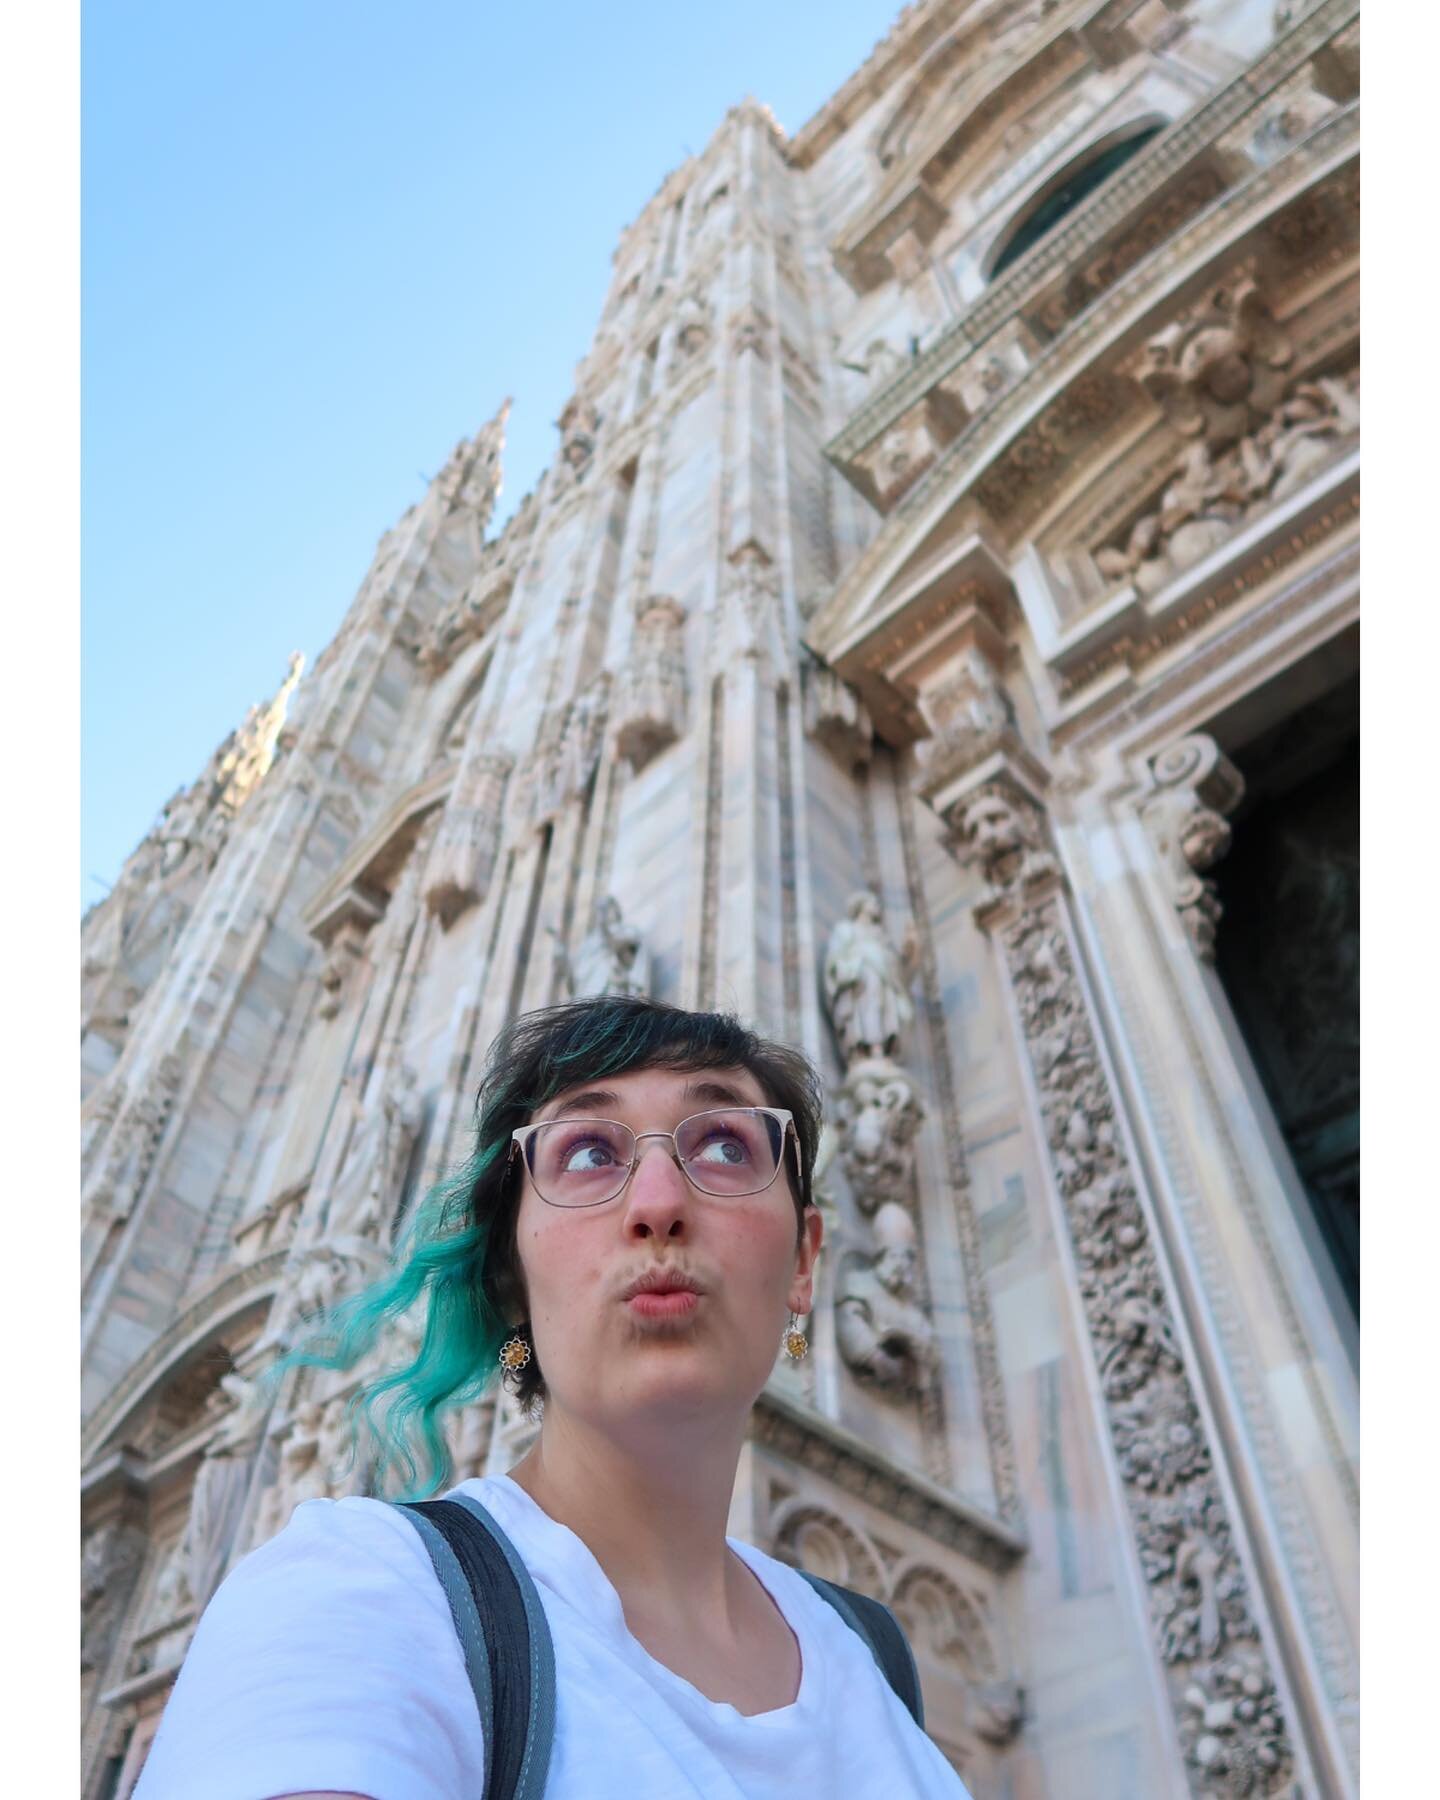 2023// It was our last day in Milan, so of course we had to make sure to check out the Duomo today! 
#AlidiaTravelAdventures #GlobeTrekkingGeek #AlidiaEuro2023 #milan #duomomilano #italy